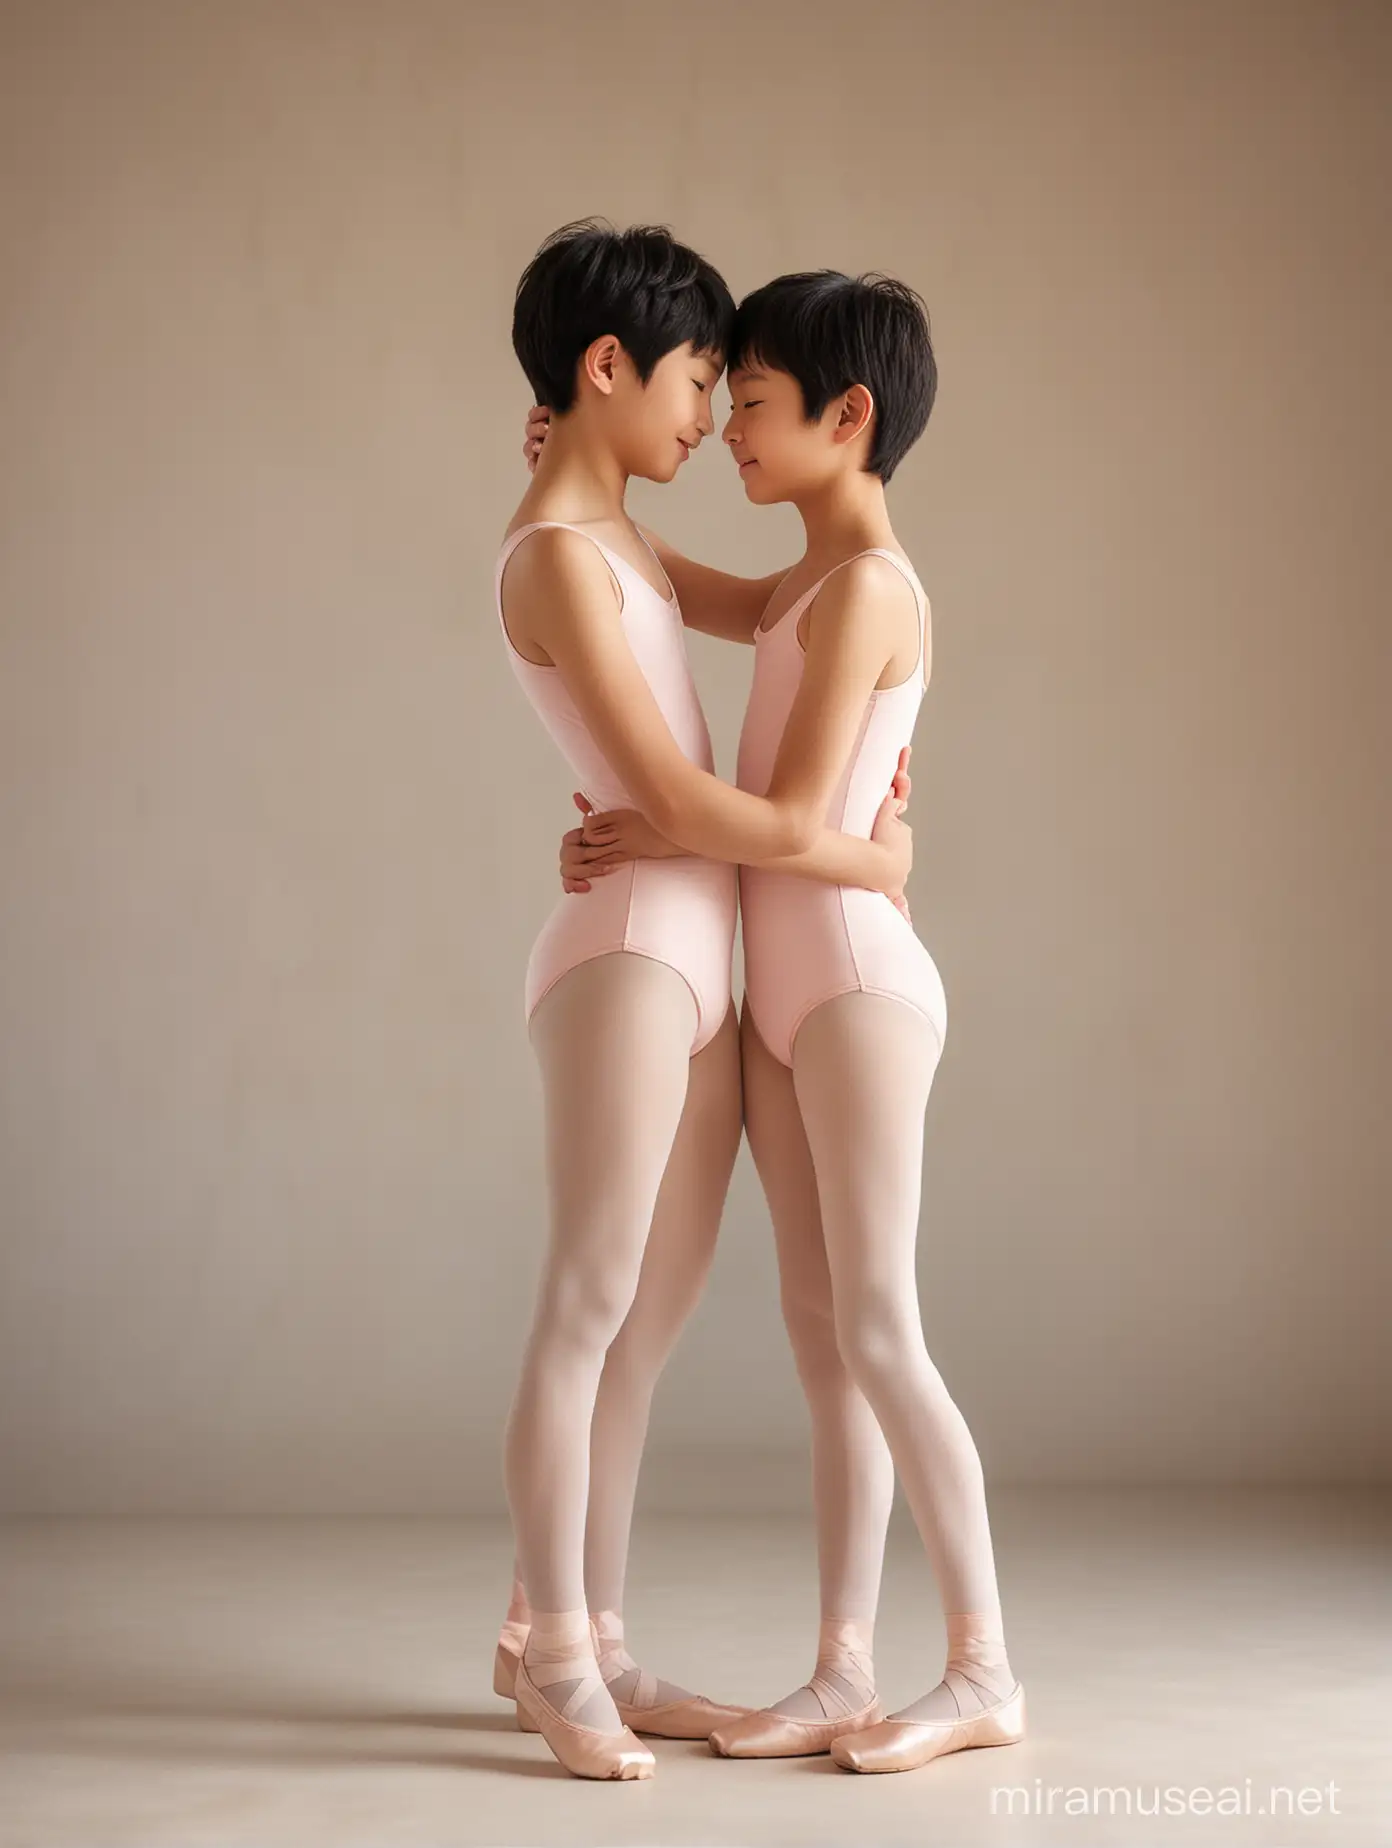 Japanese Ballet Boys Embracing in Studio